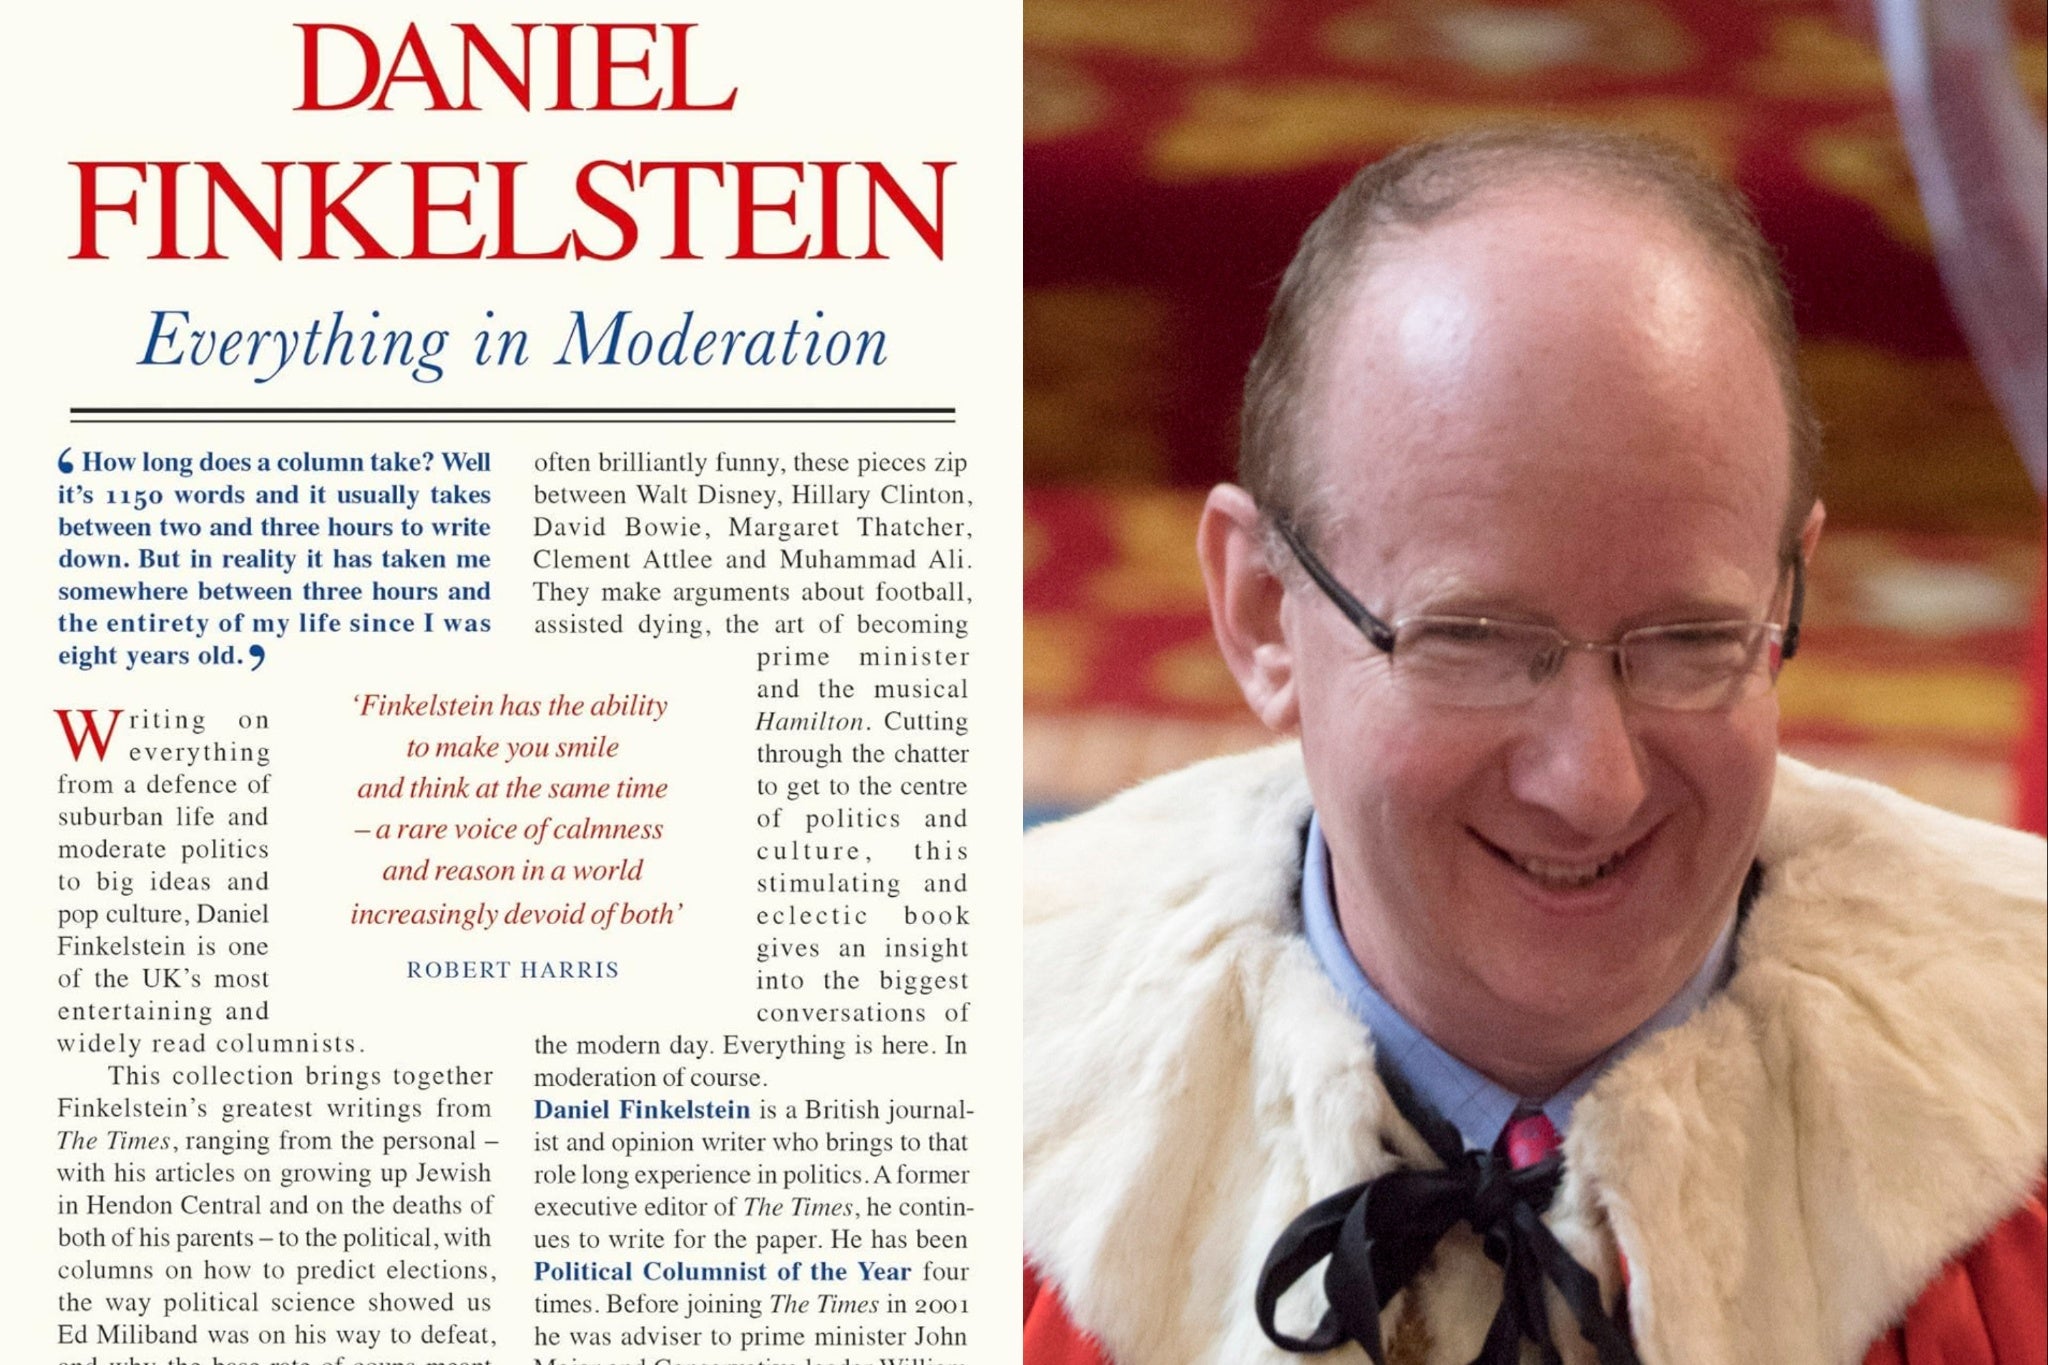 Daniel Finkelstein, author of ‘Everything in Moderation'